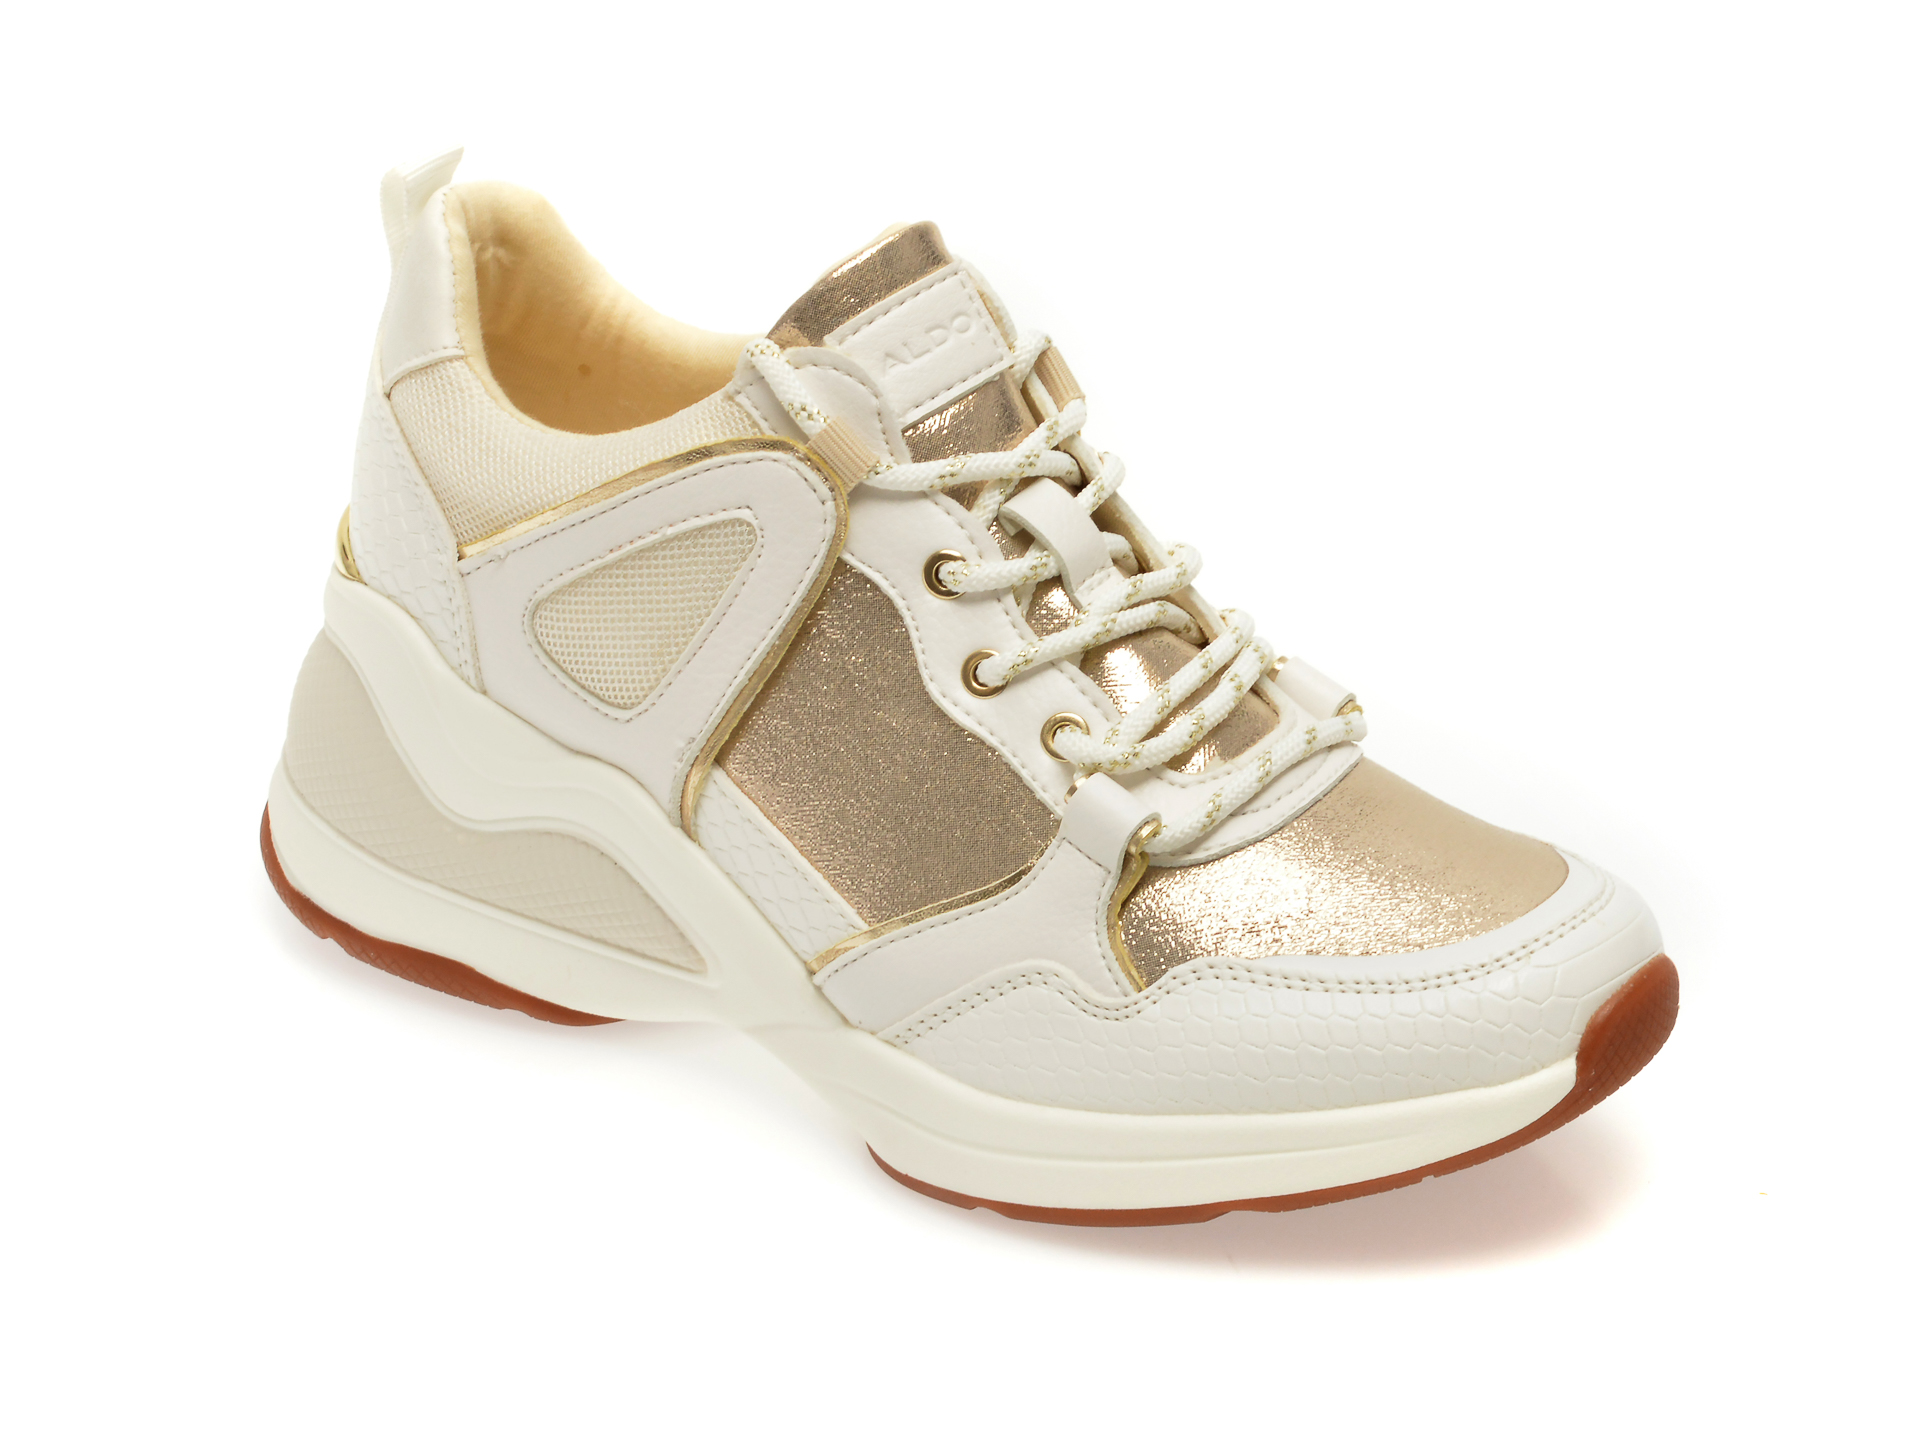 Pantofi sport ALDO albi, Vany710, din material textil si piele ecologica Aldo